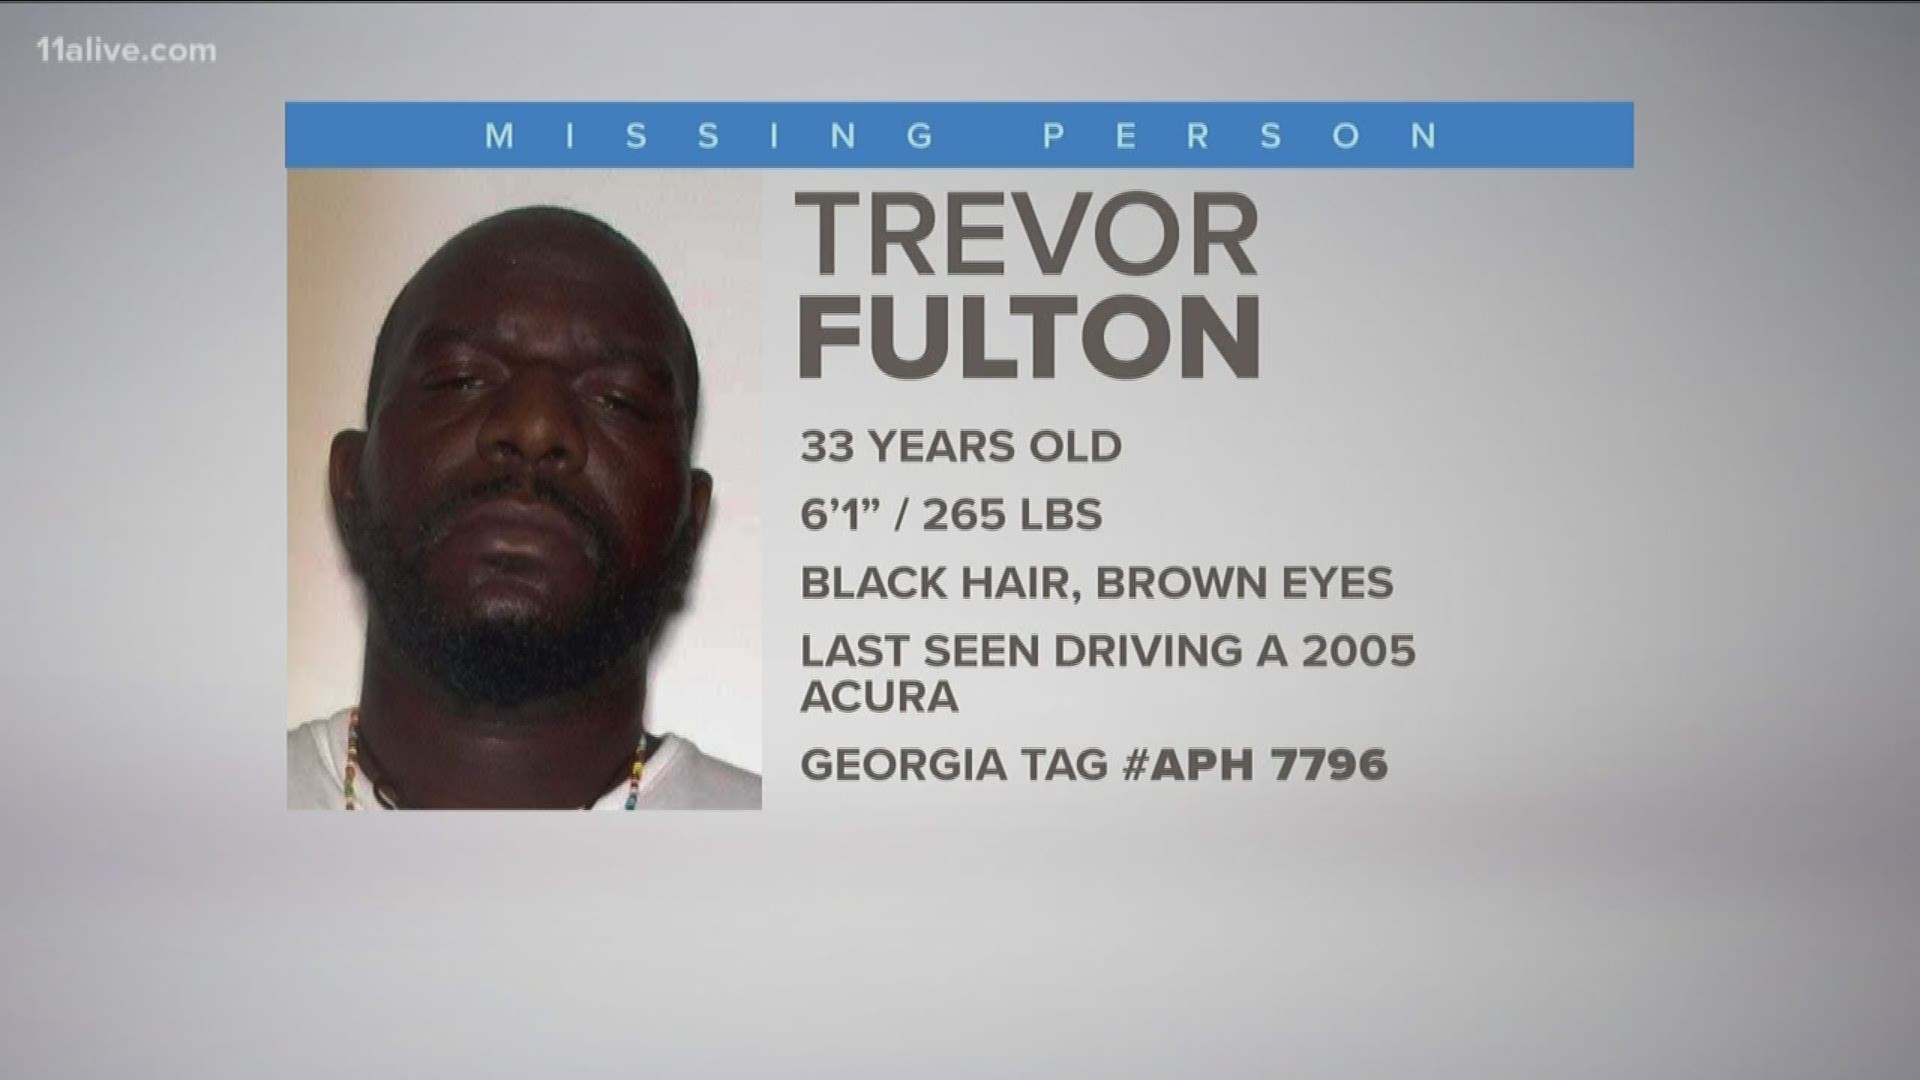 Trevor Martin left a medical facility in a 2005 Acura, police said.